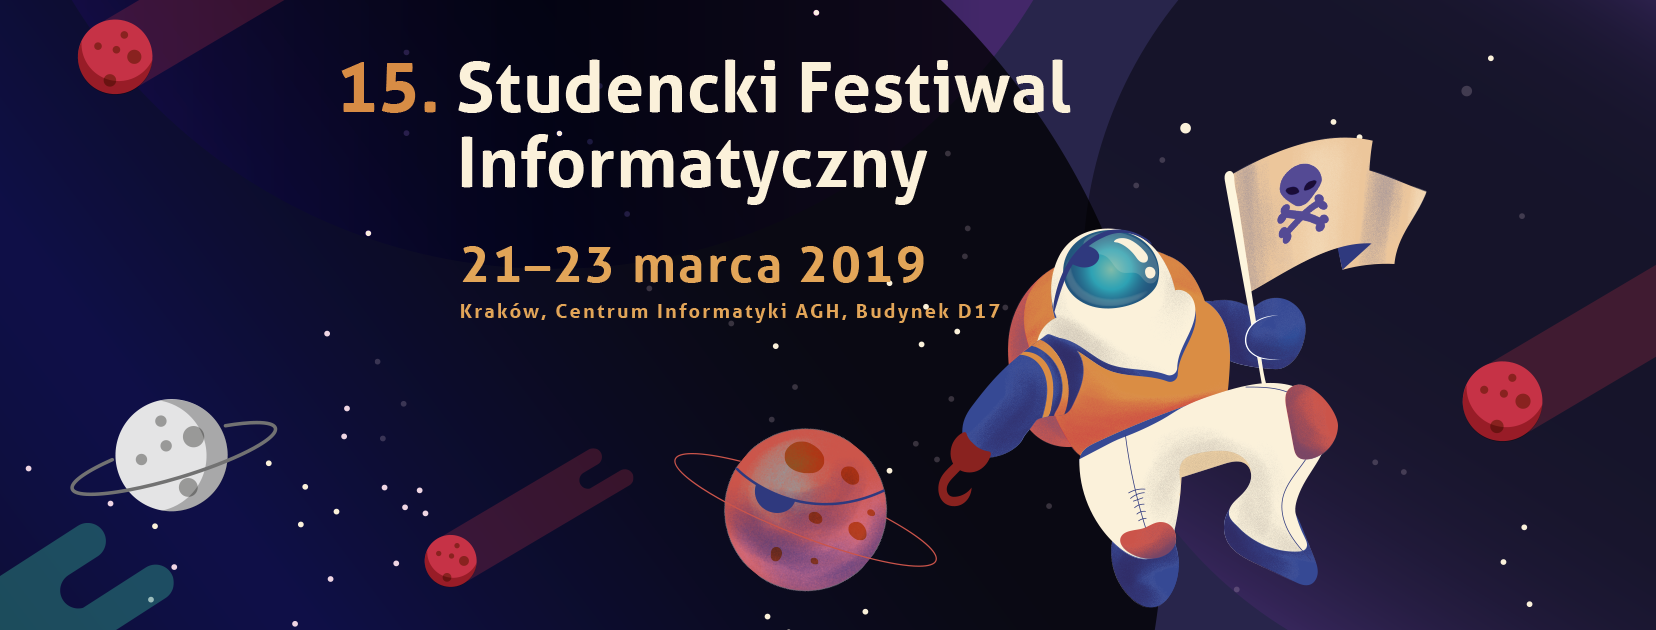 15-studencki-festiwal-informatyczny